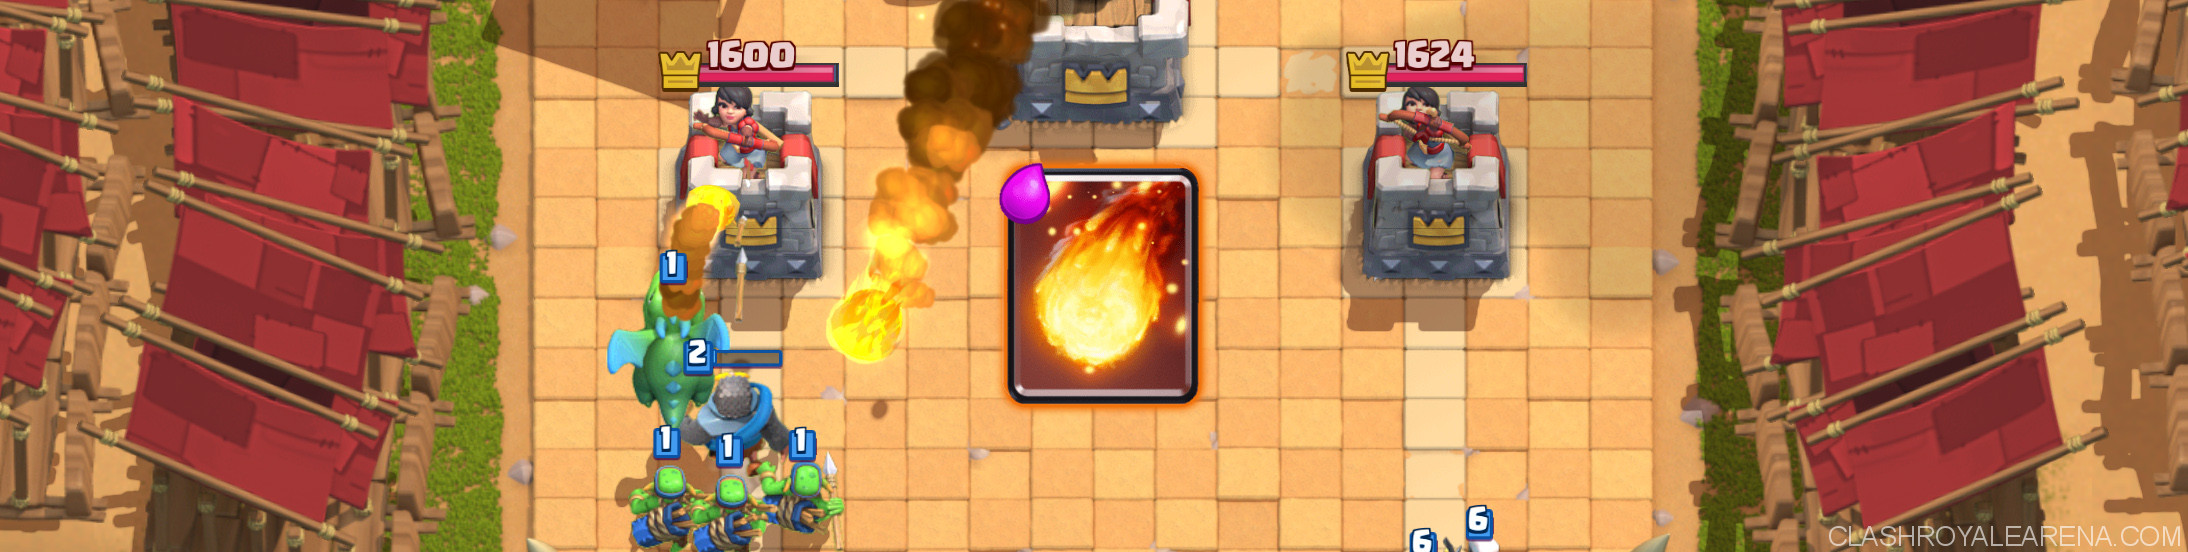 clash royale fireball